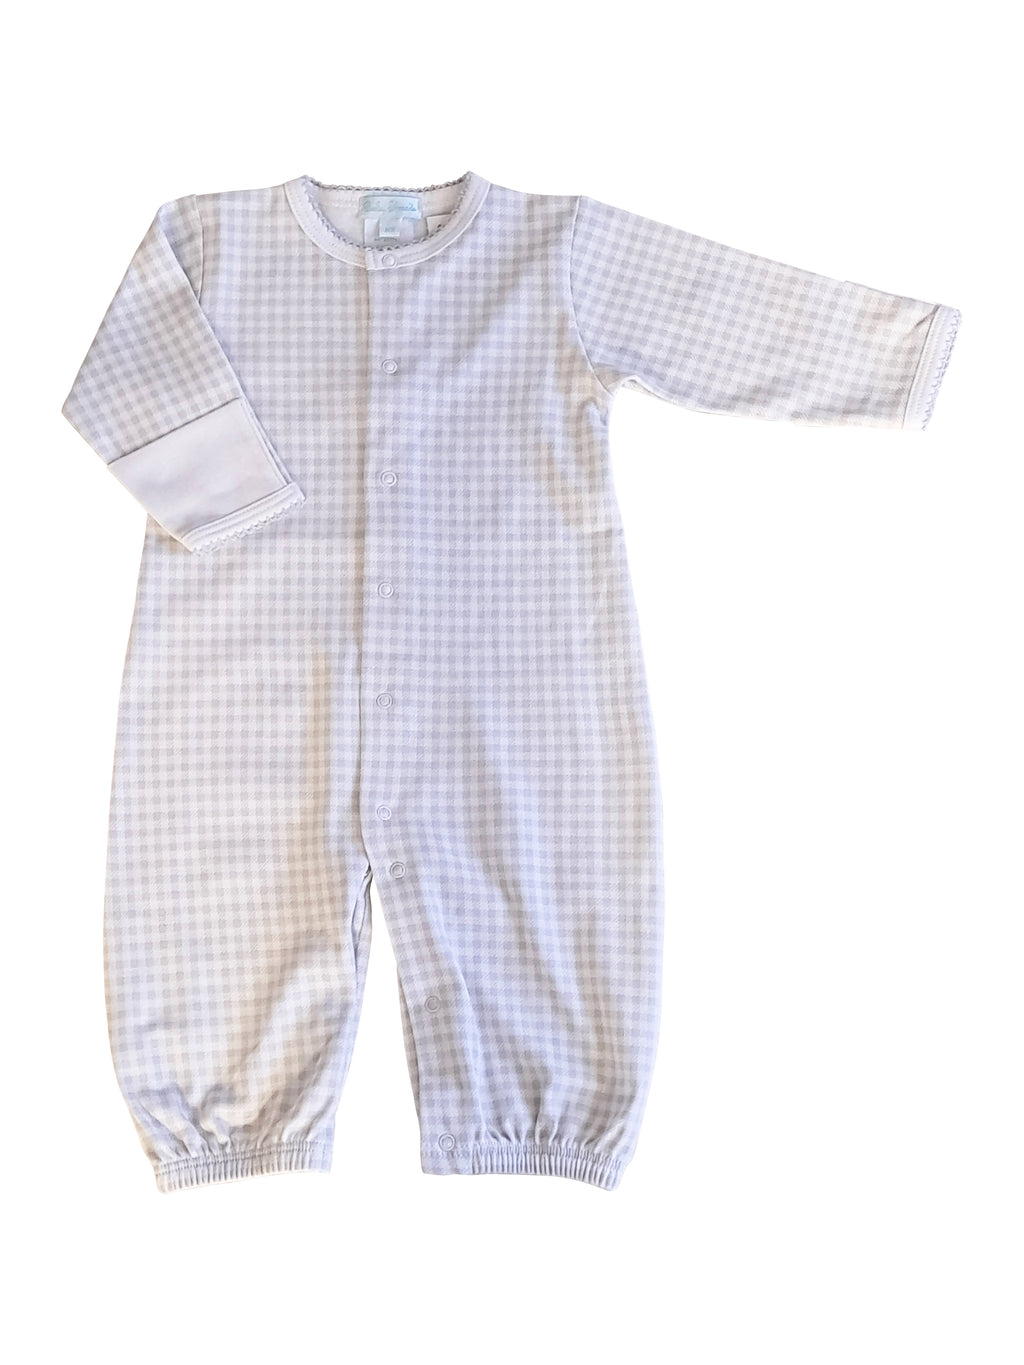 Baby's "Grey Checks" Unisex Pima Cotton Converter Gown